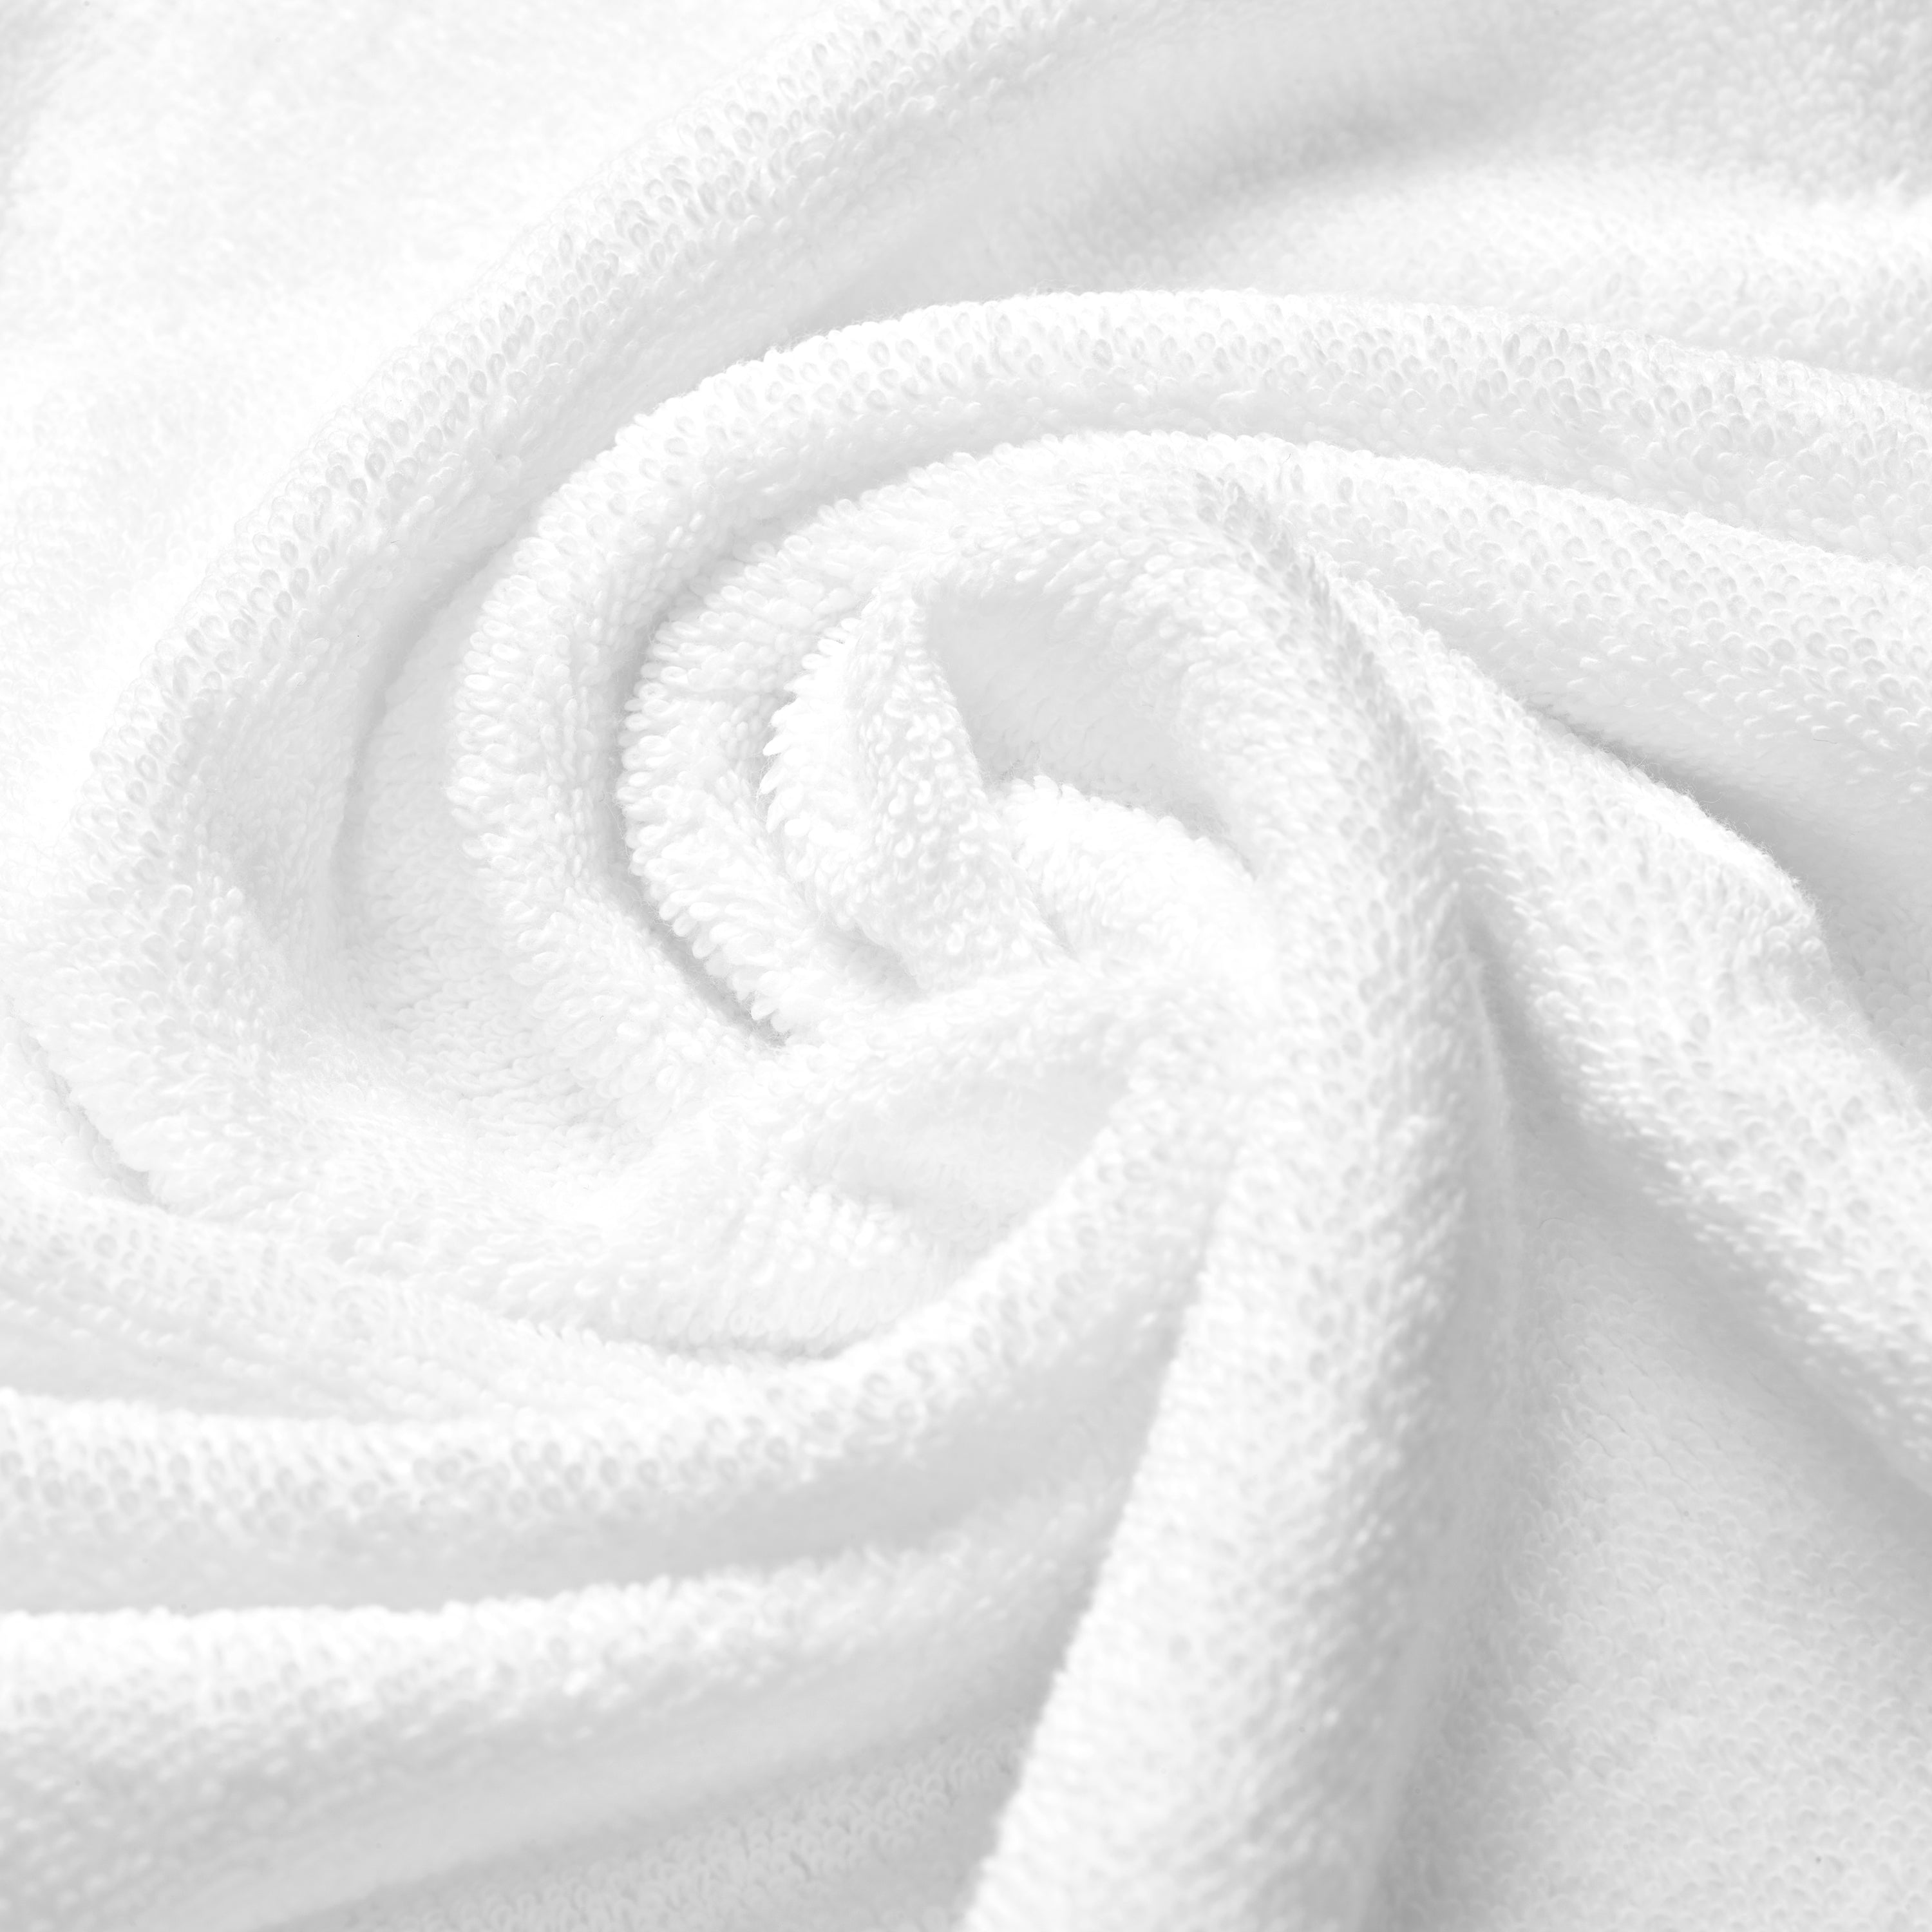 Aquacado 2 Pc Bath & 4 Pc Hand Towel Set of 6 White & Charcoal Grey